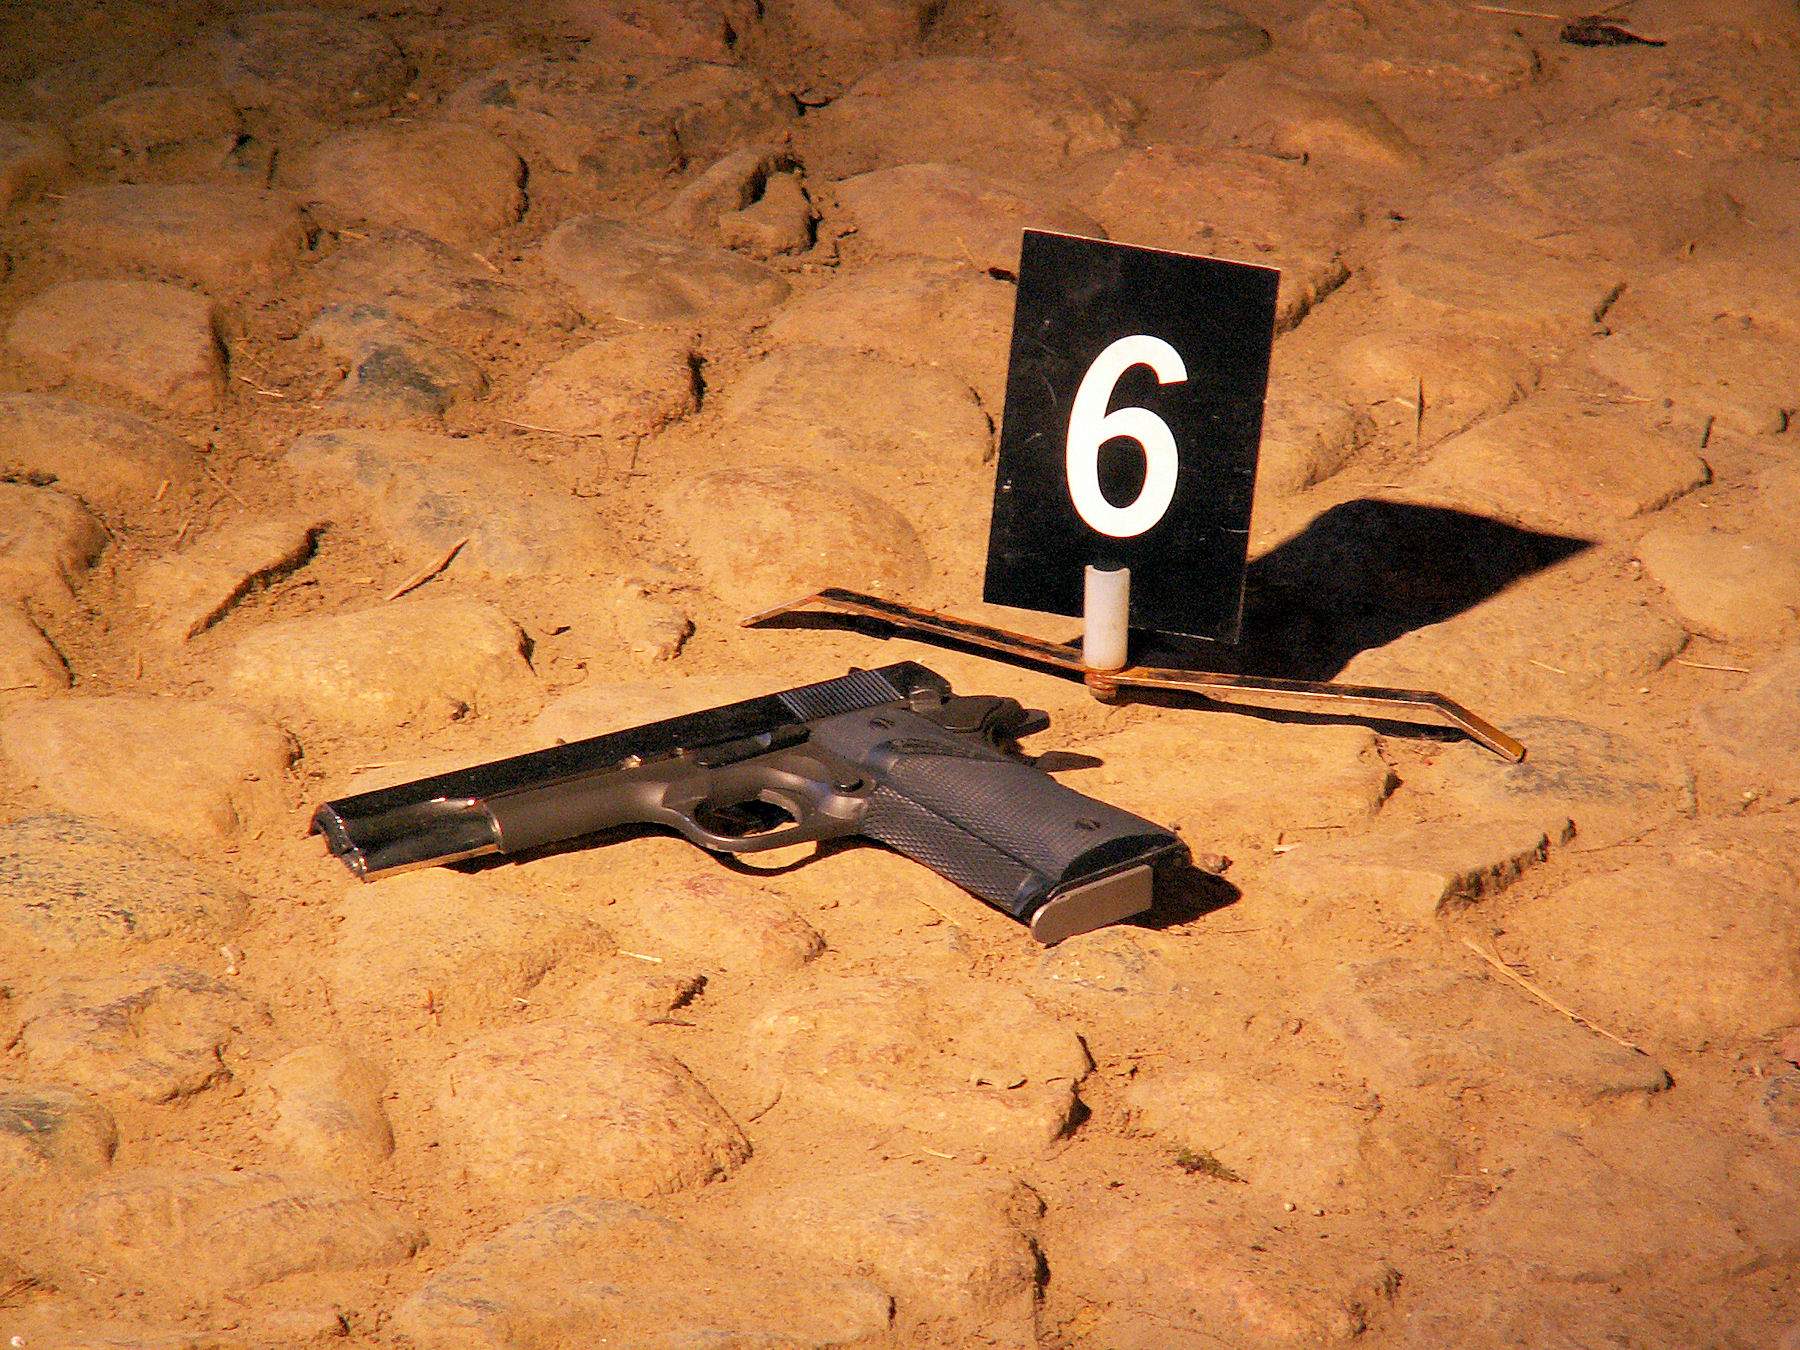 A gun as evidence (Photo by Marcel Burger)